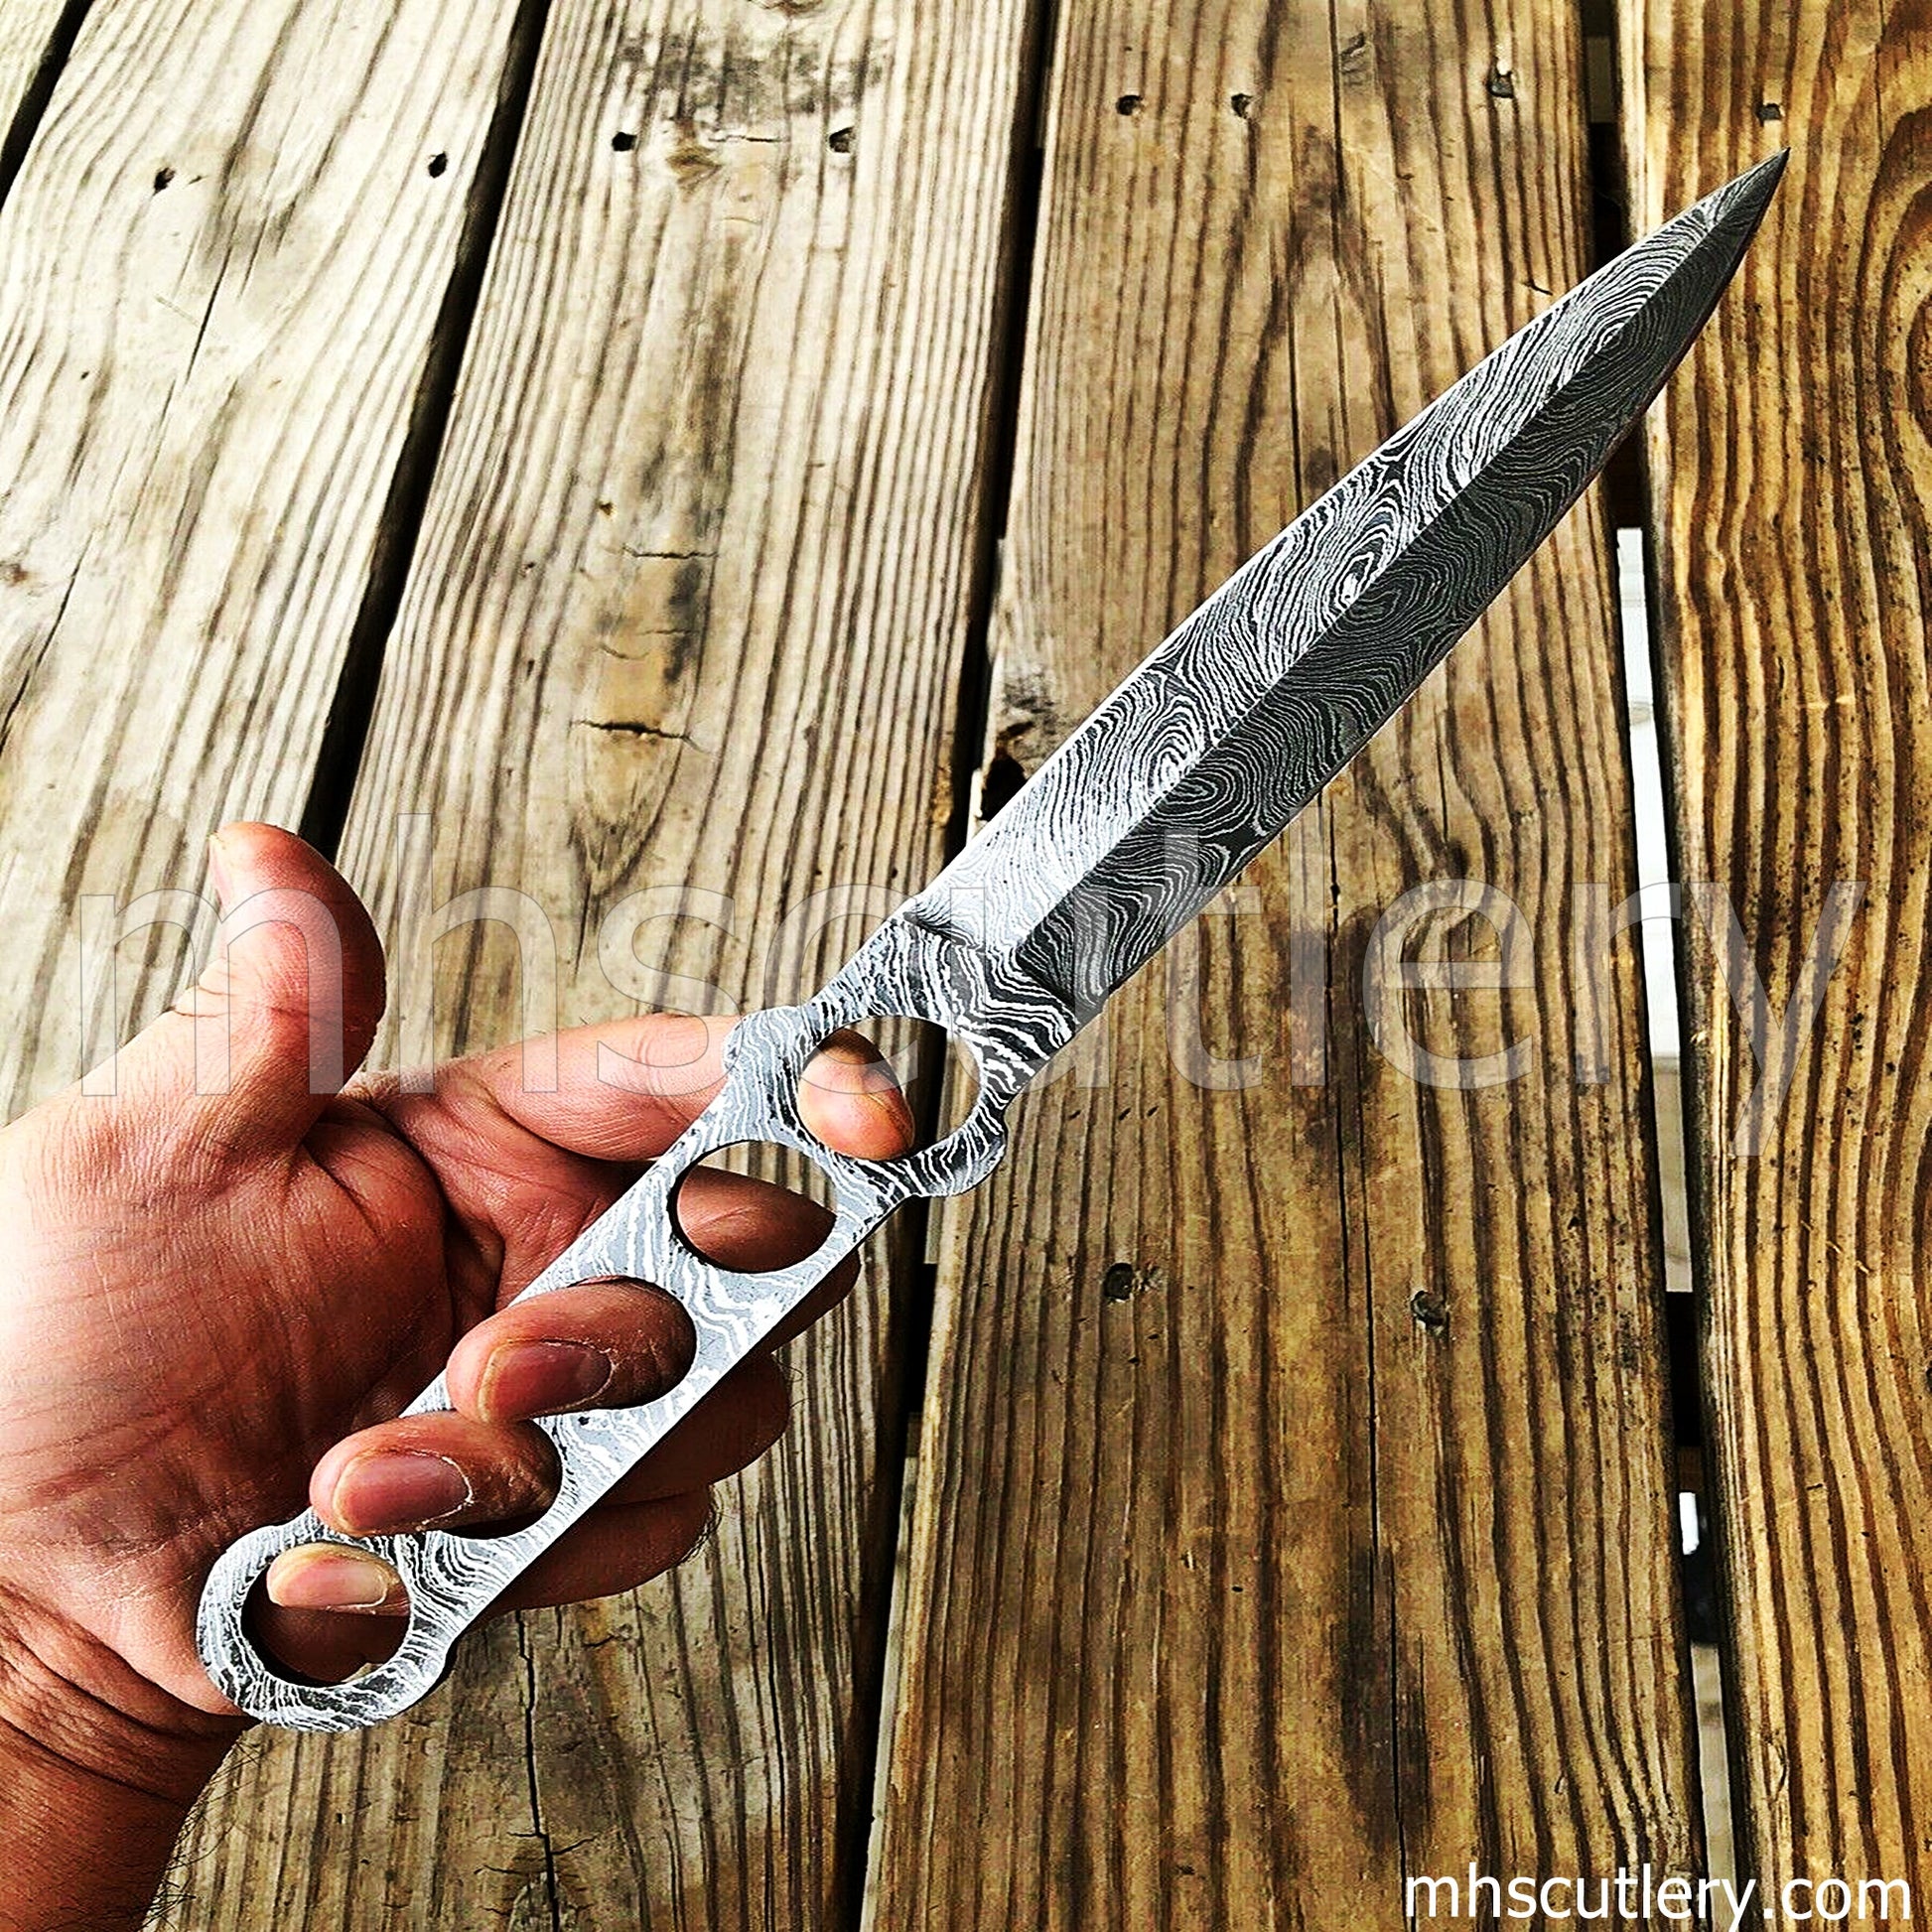 Handmade Damascus Steel Tactical Dagger Knife Blank Blade | mhscutlery